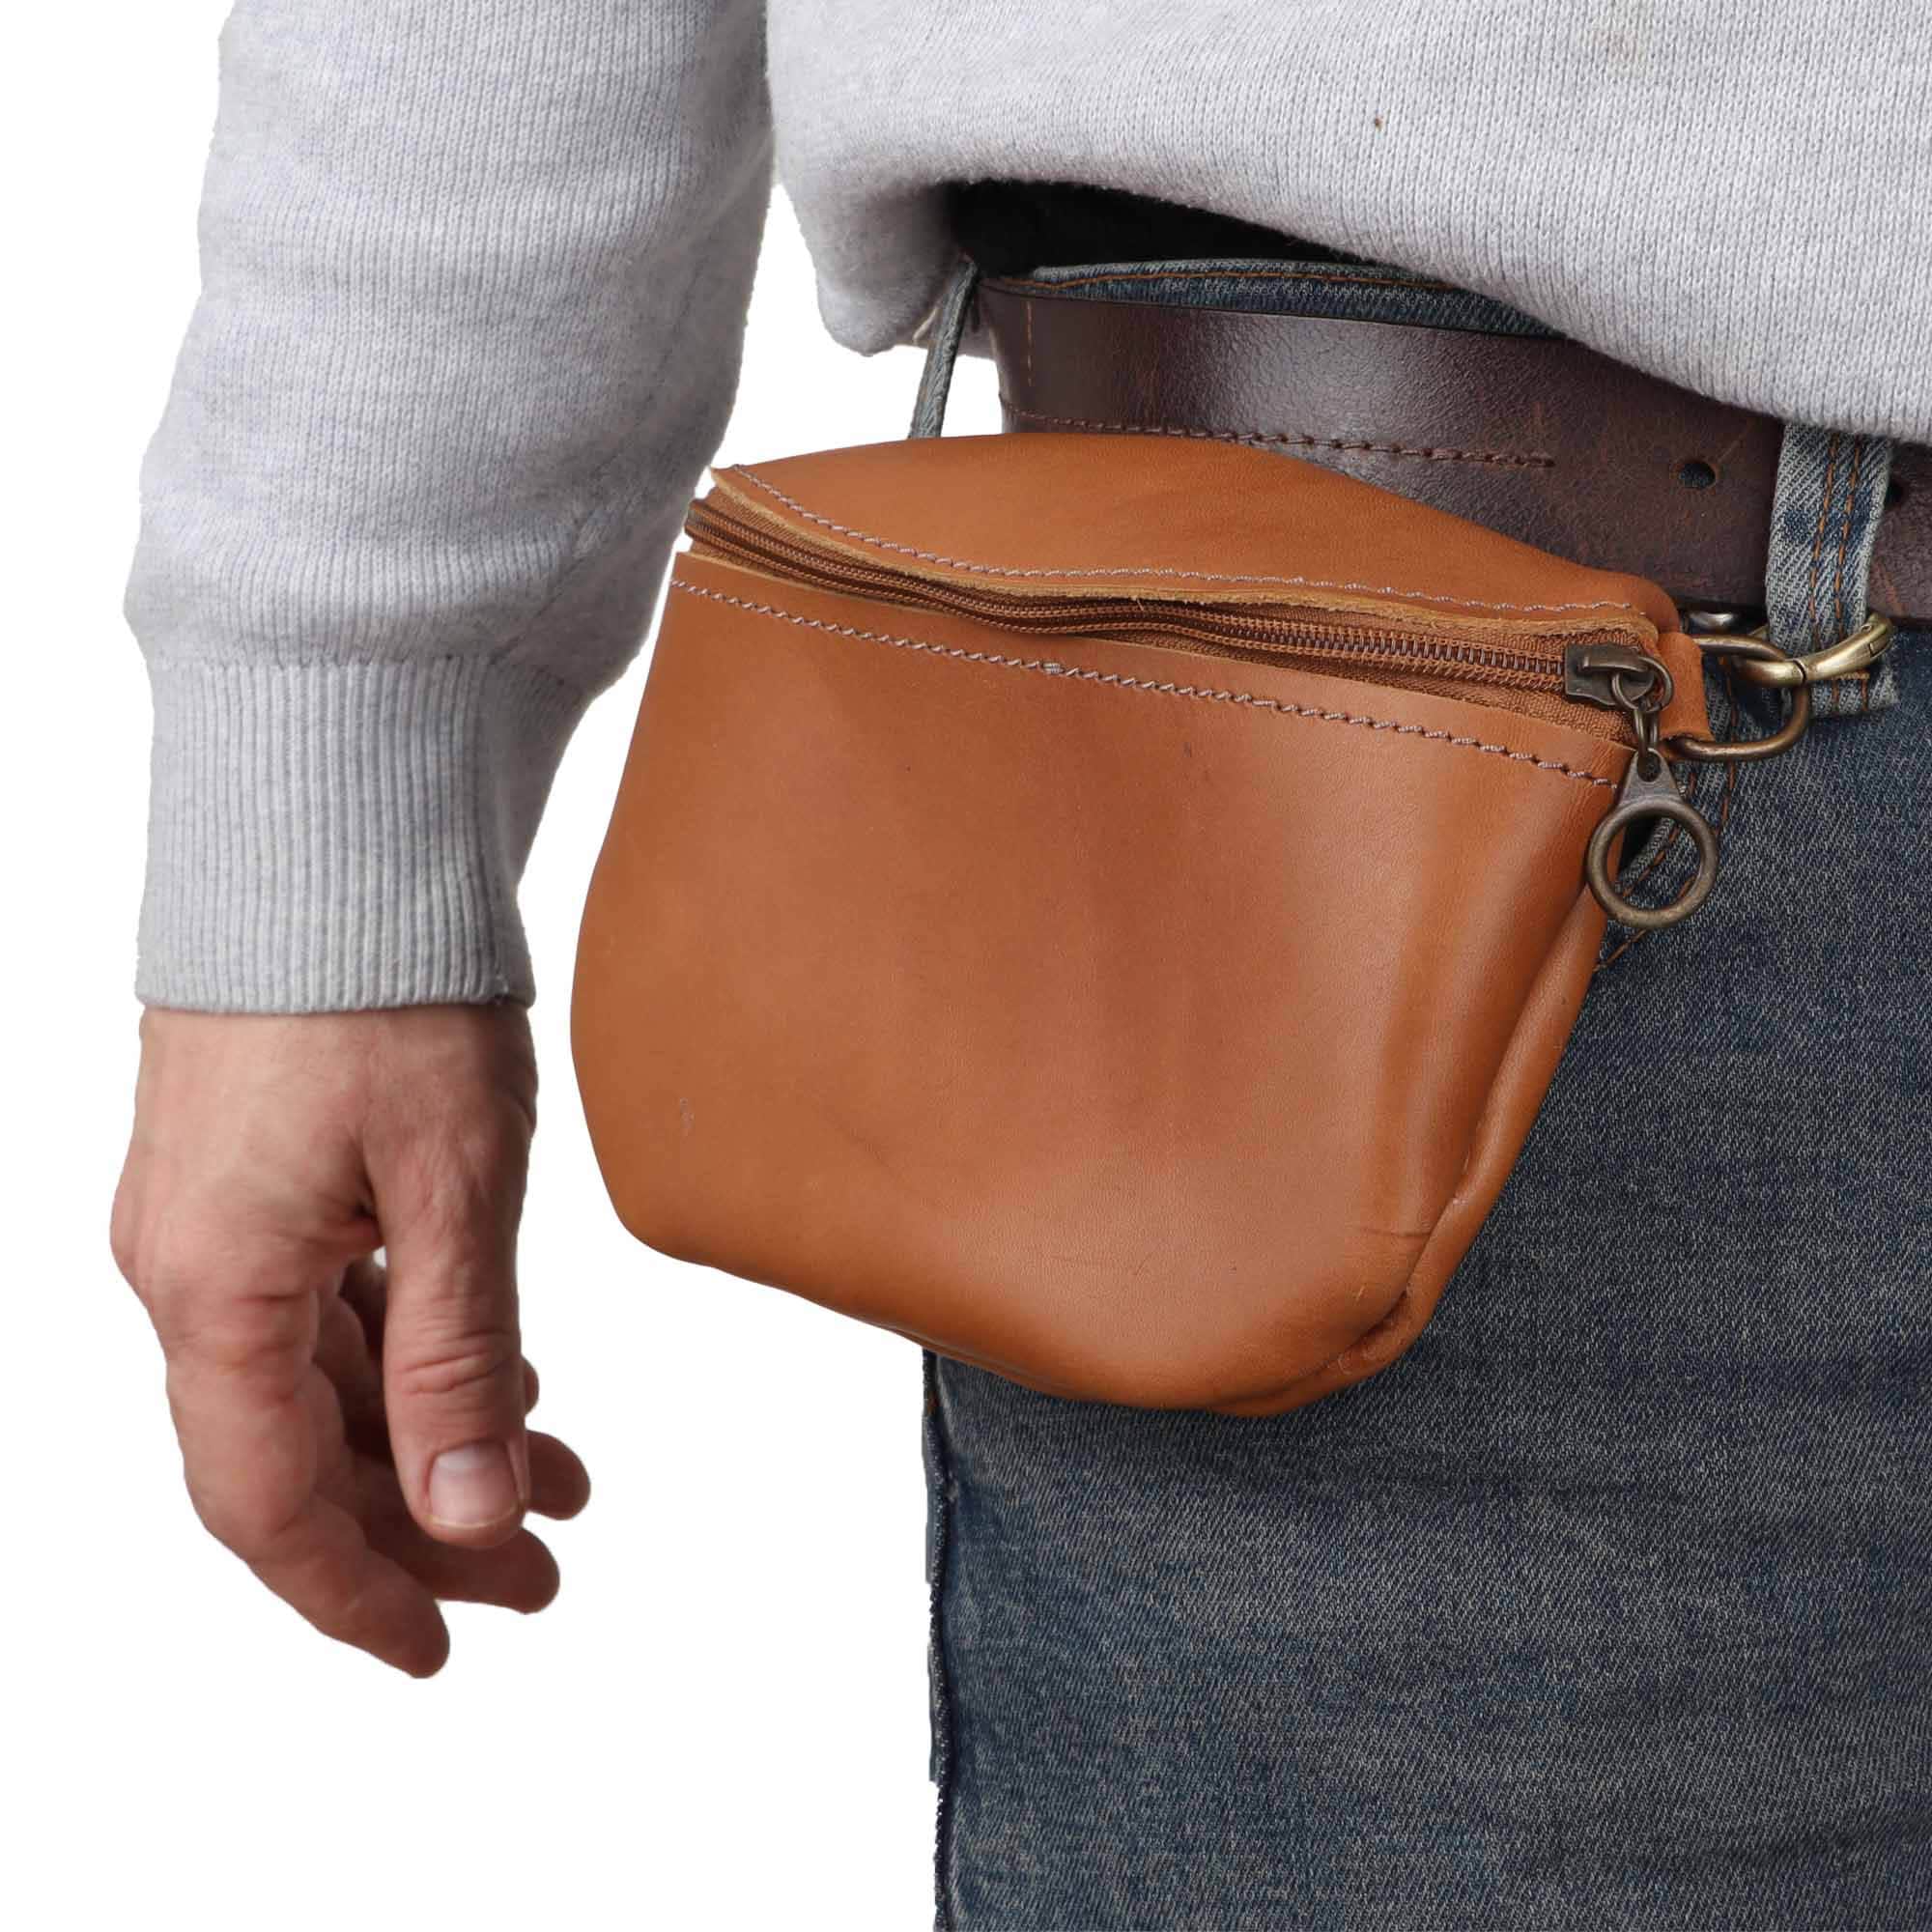 Pocket Belt or Fanny Pack Extender to Use With Forage Design